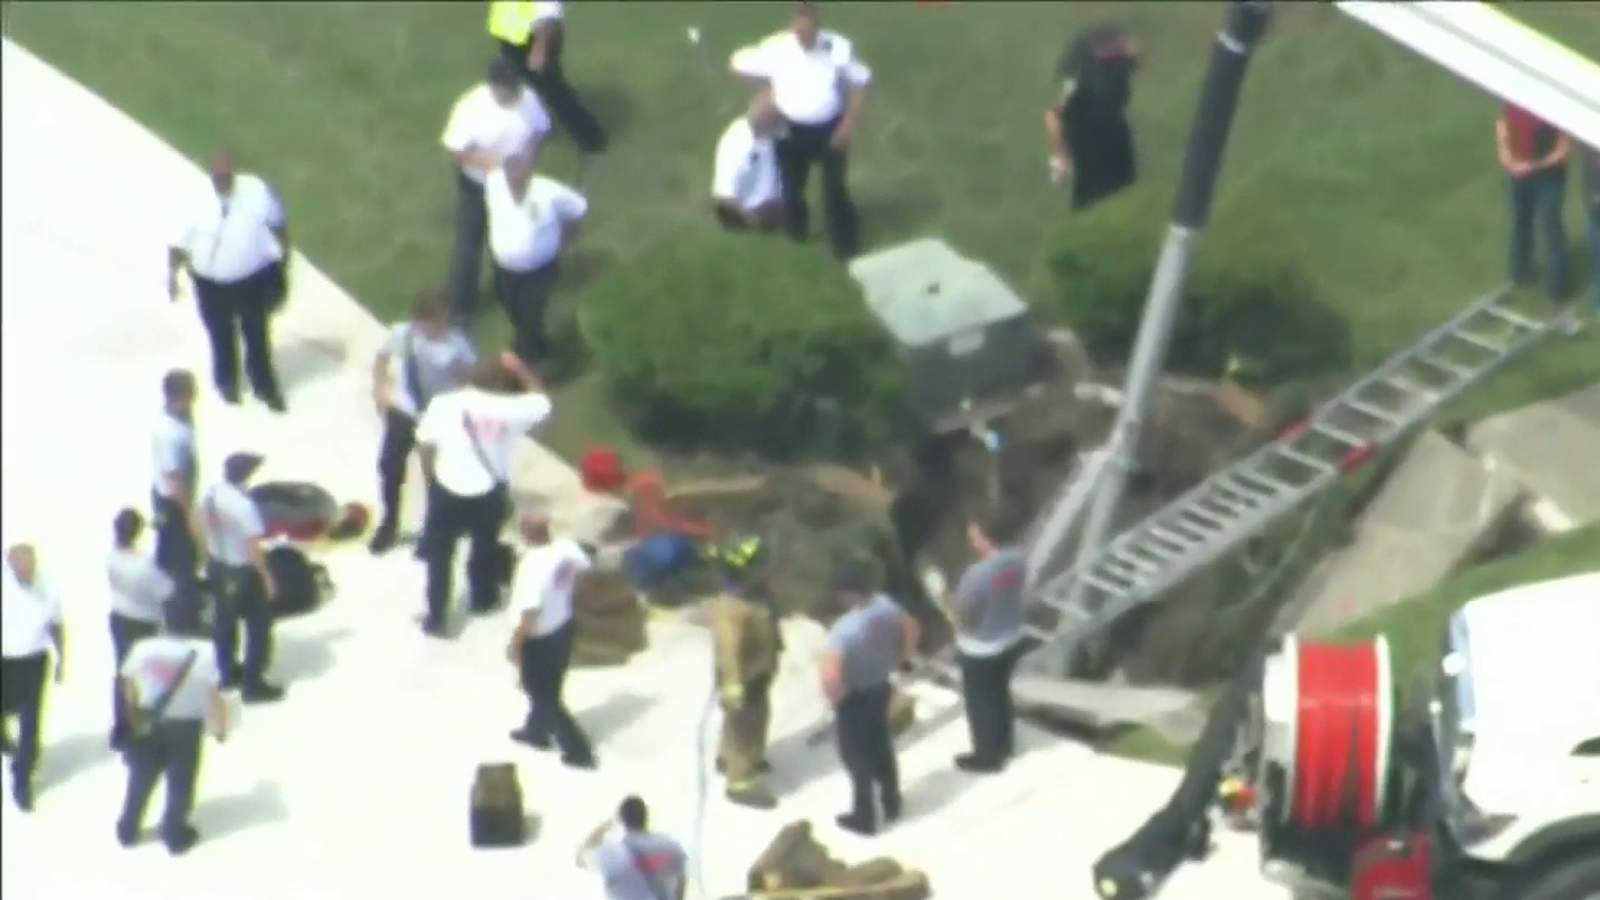 Sidewalk collapse kills Seminole worker; firefighters injured during rescue attempt